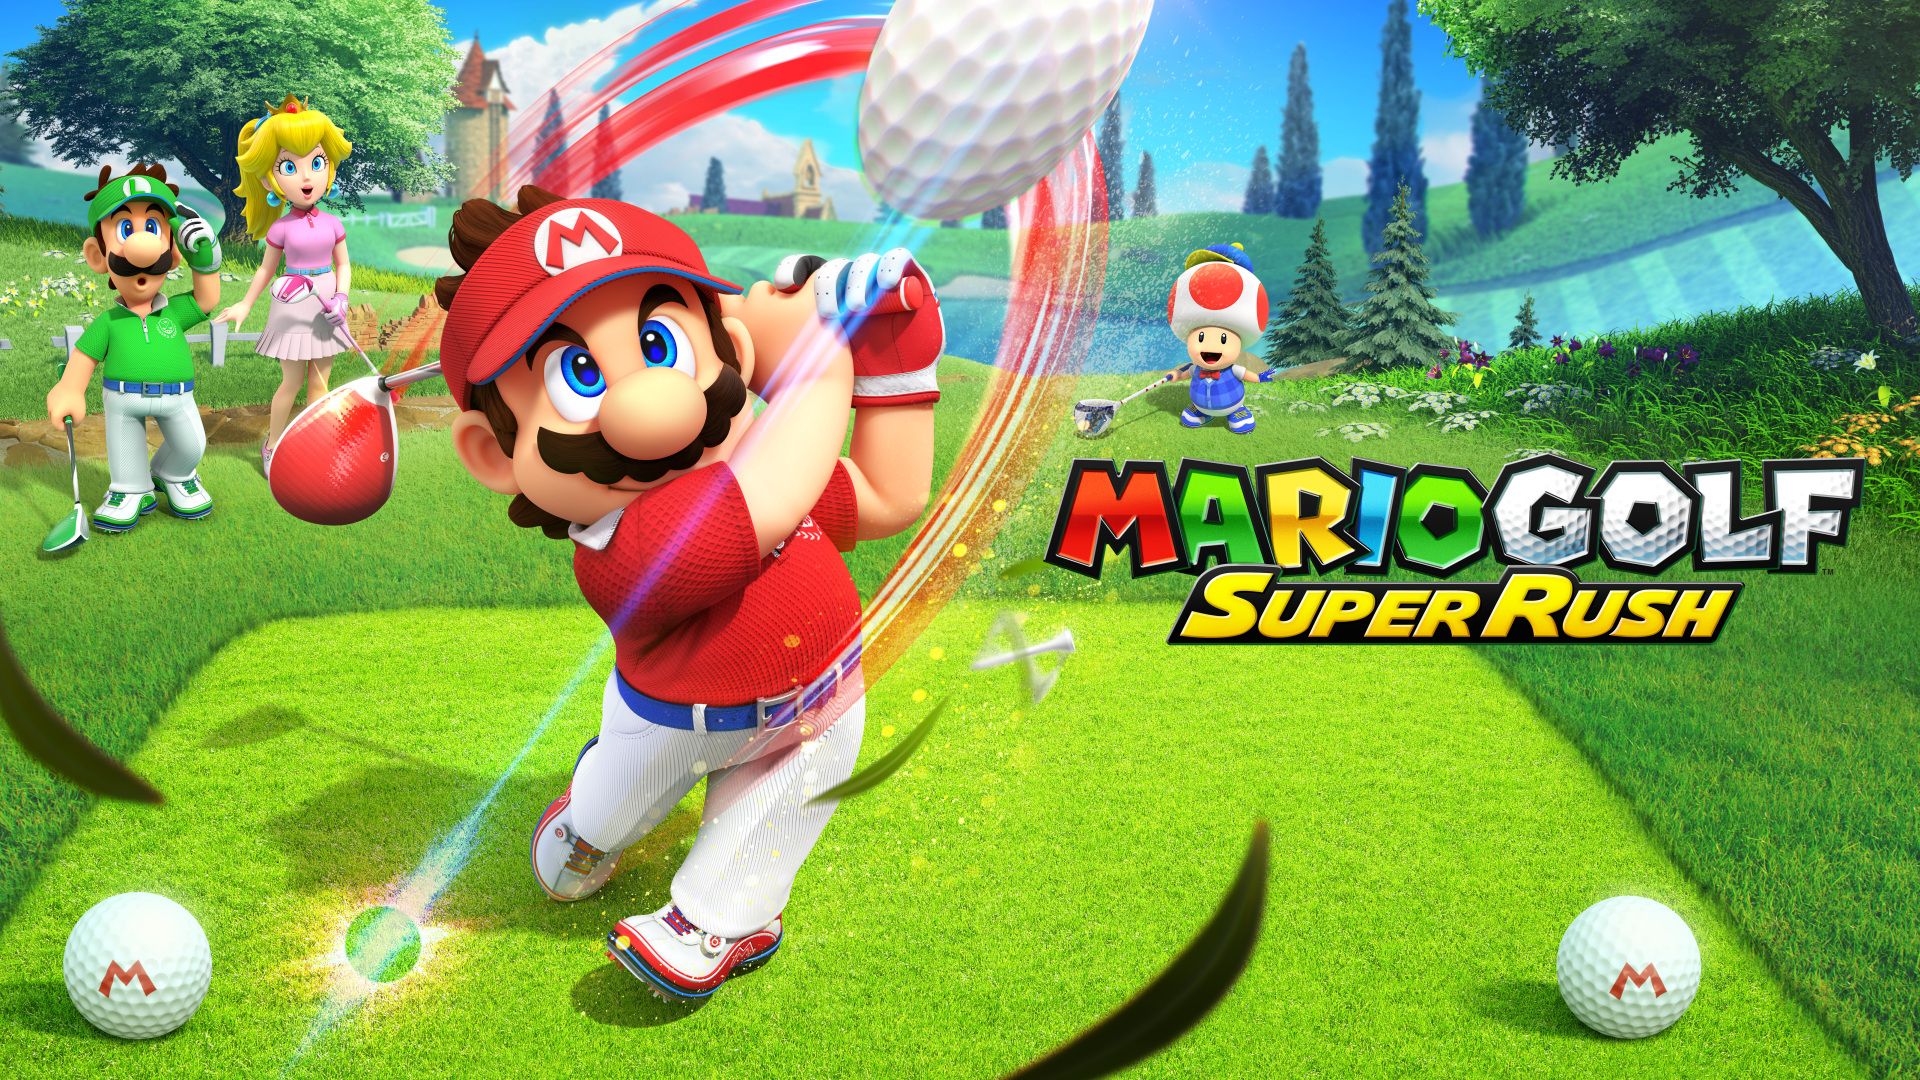 Mario Golf: Super Rush: free desktop wallpaper and background image